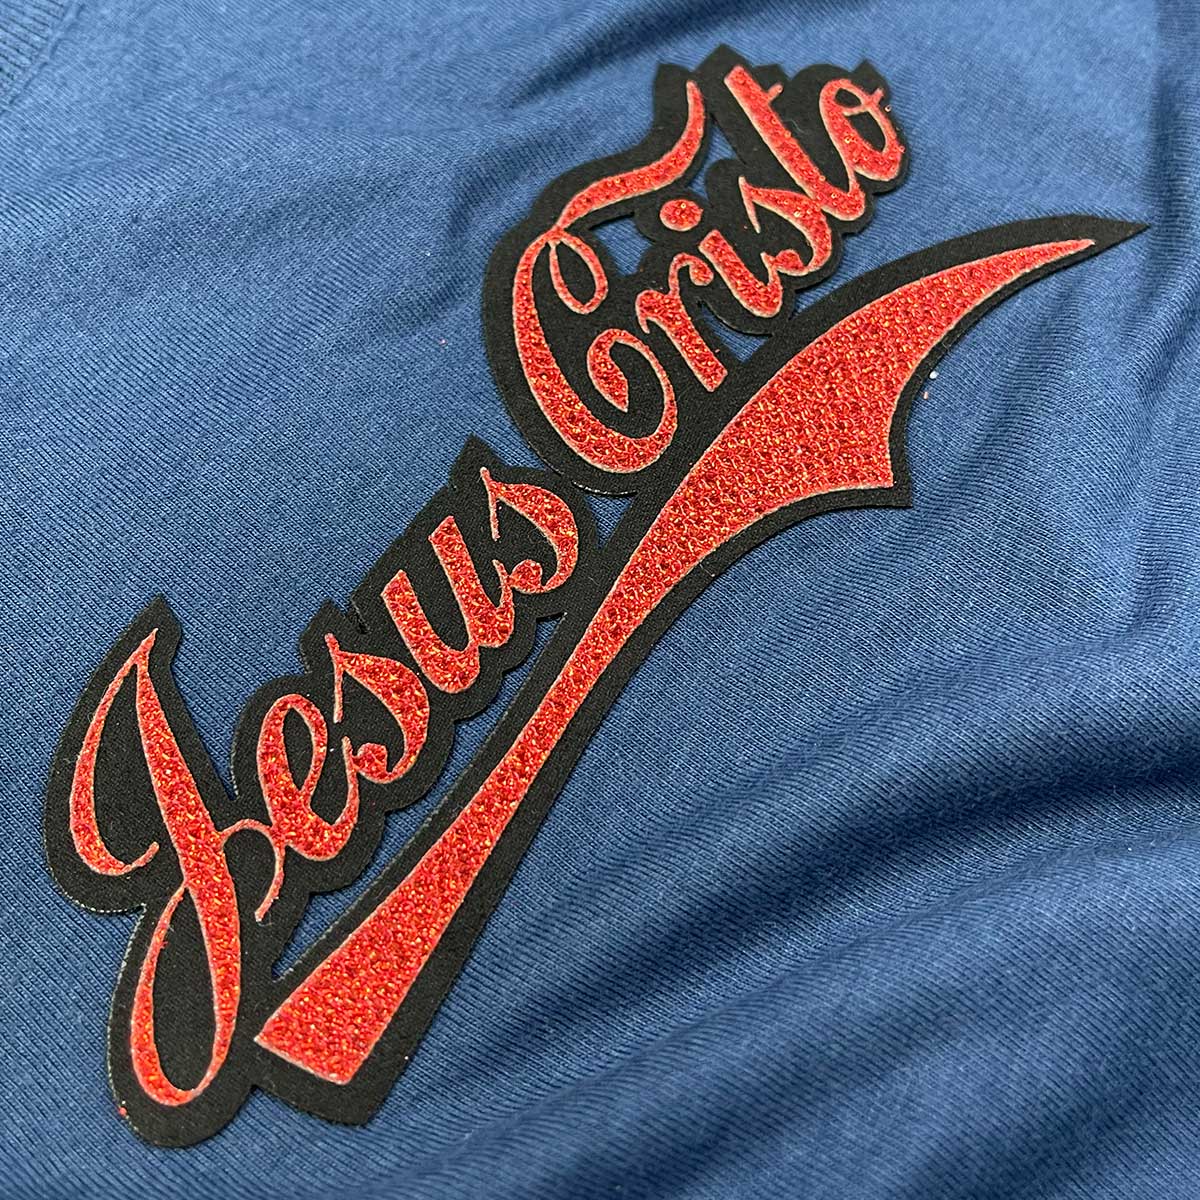 T-Shirt Infantil Azul Jesus Cristo Cola